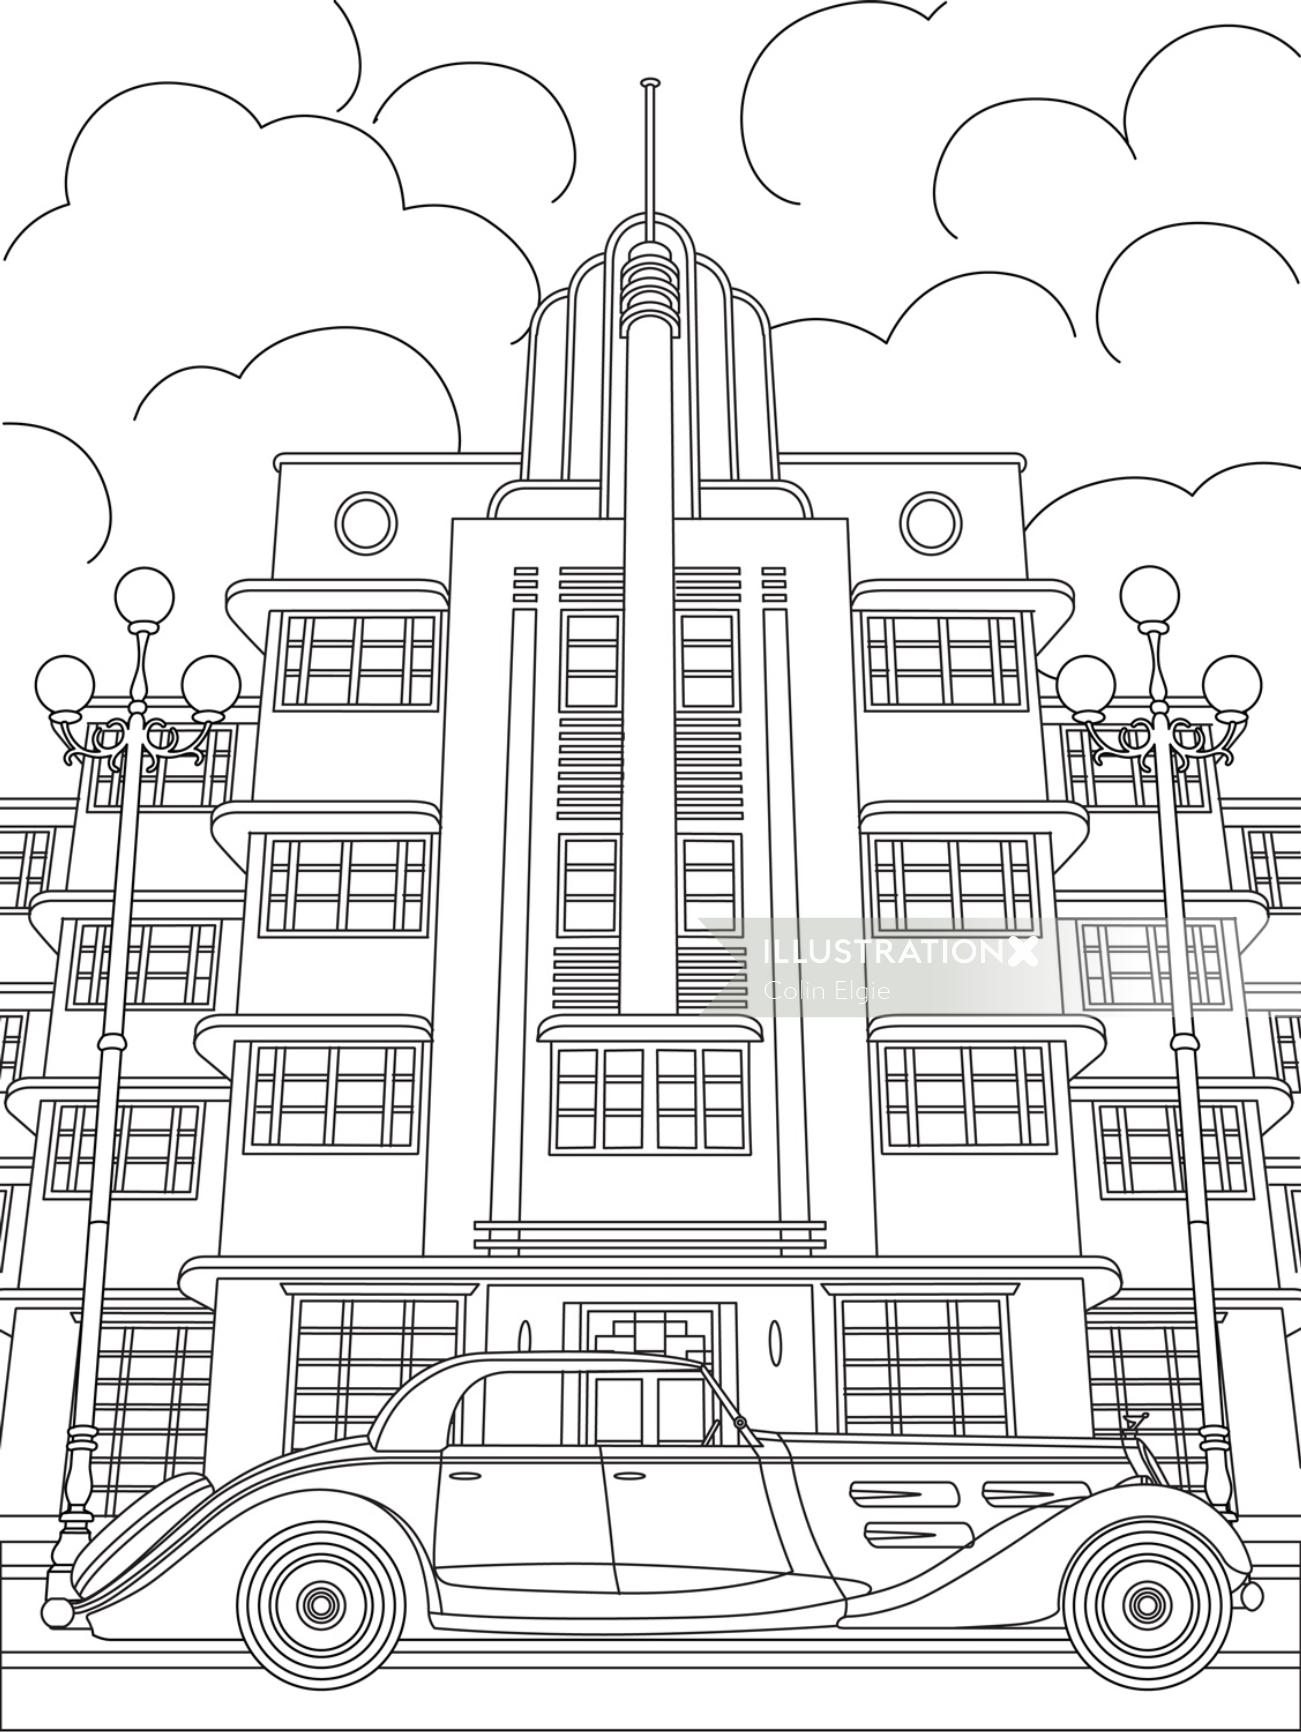 Dibujo lineal del edificio Deco y coche